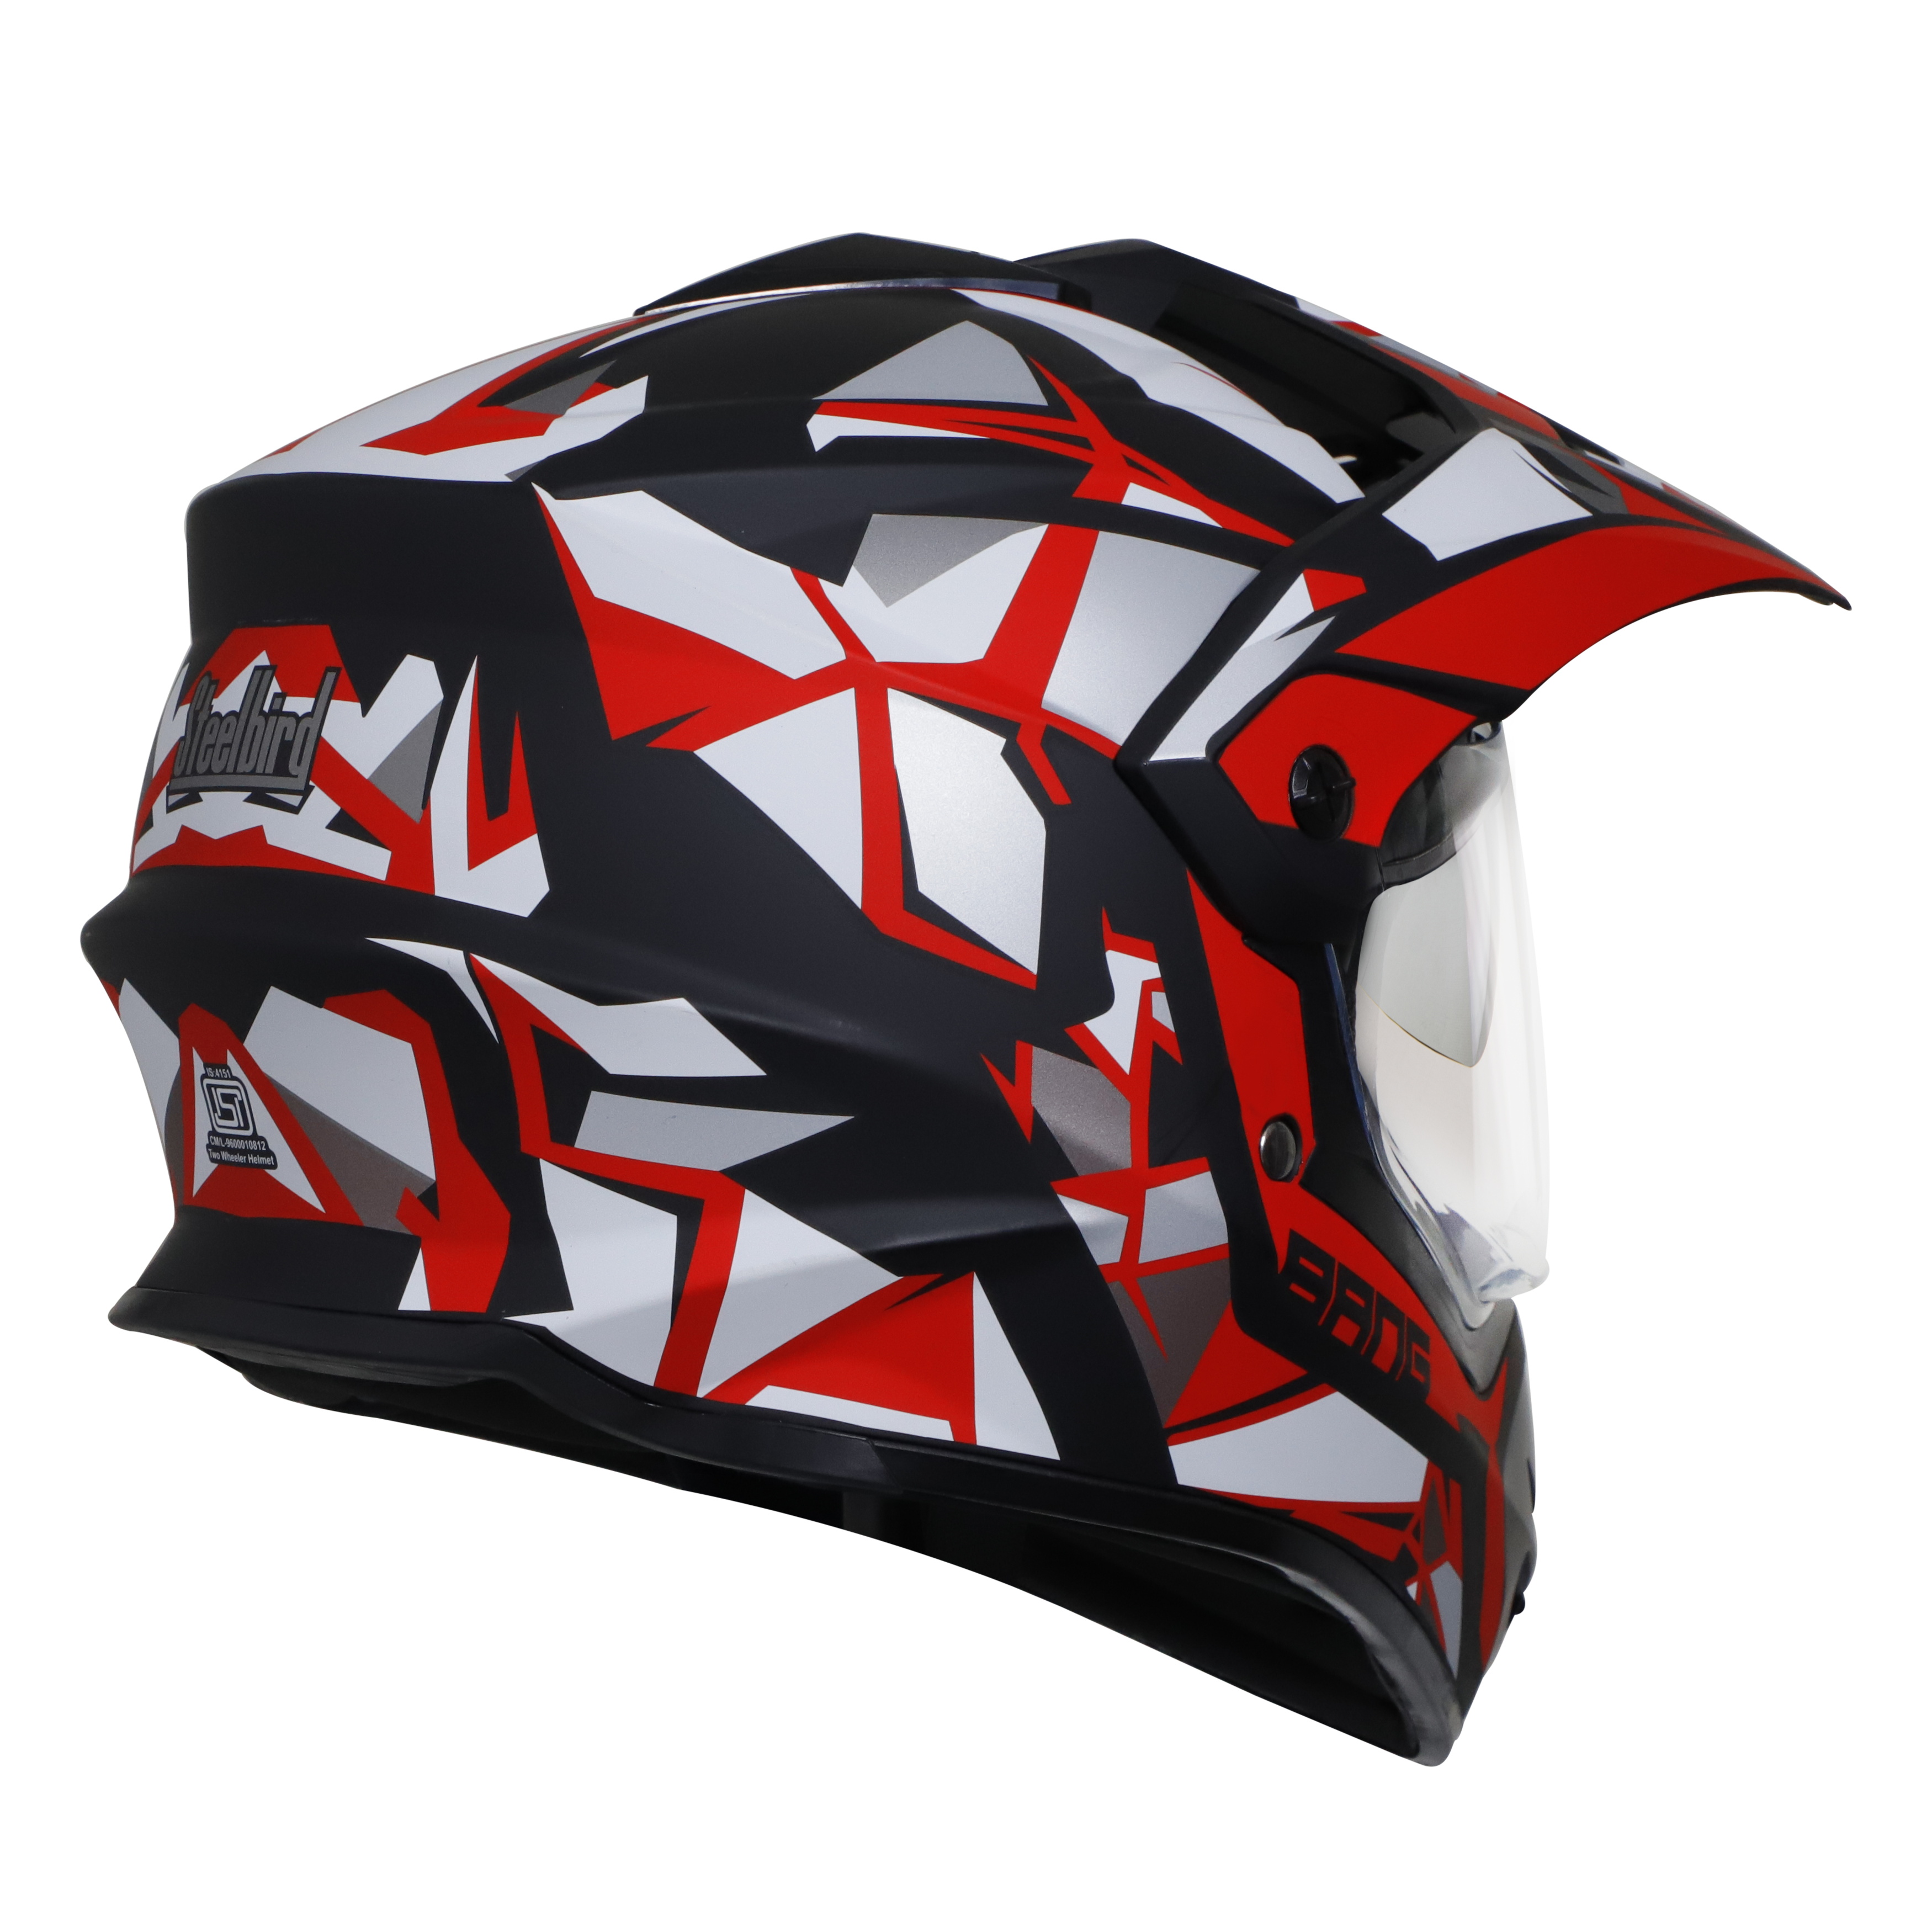 Steelbird Off Road Bang KTN ISI Certified ABS Material Shell Motocross Helmet With Inner Chrome Silver Sun Shield (Matt Black Red)